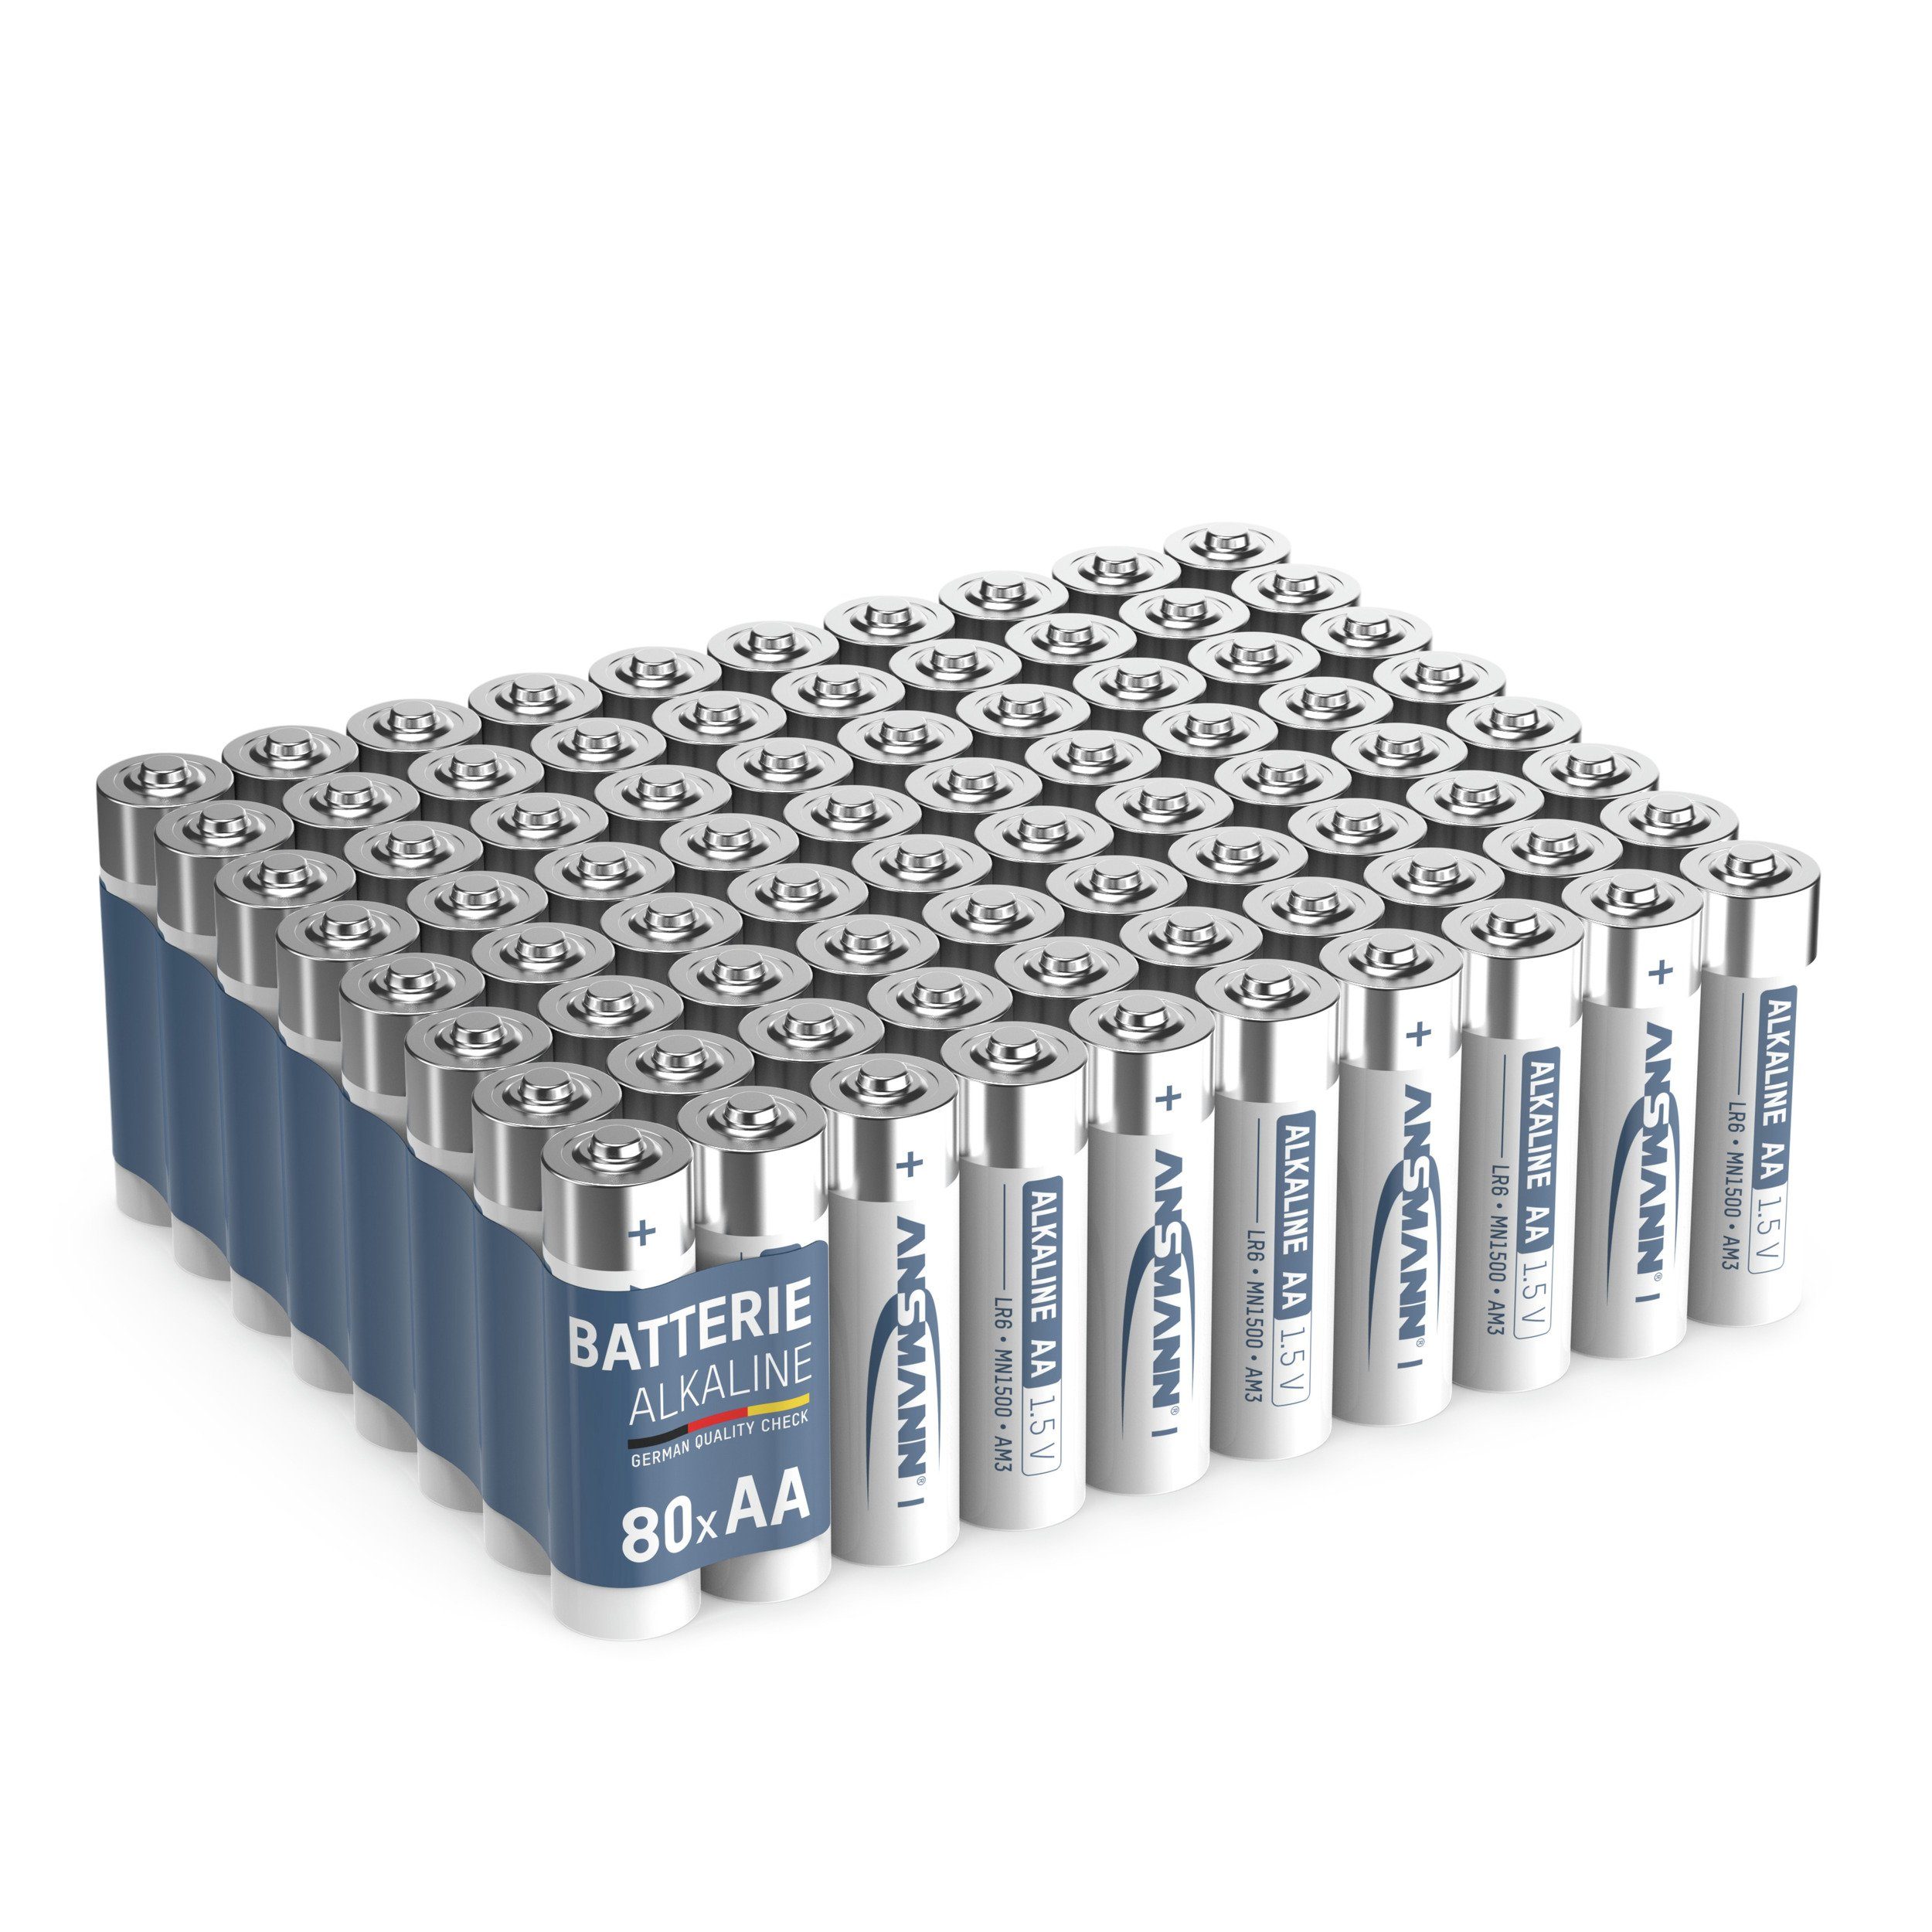 ANSMANN AG Batterien AA 80 Stück, Alkaline Mignon Batterie, für Lichterkette uvm. Batterie